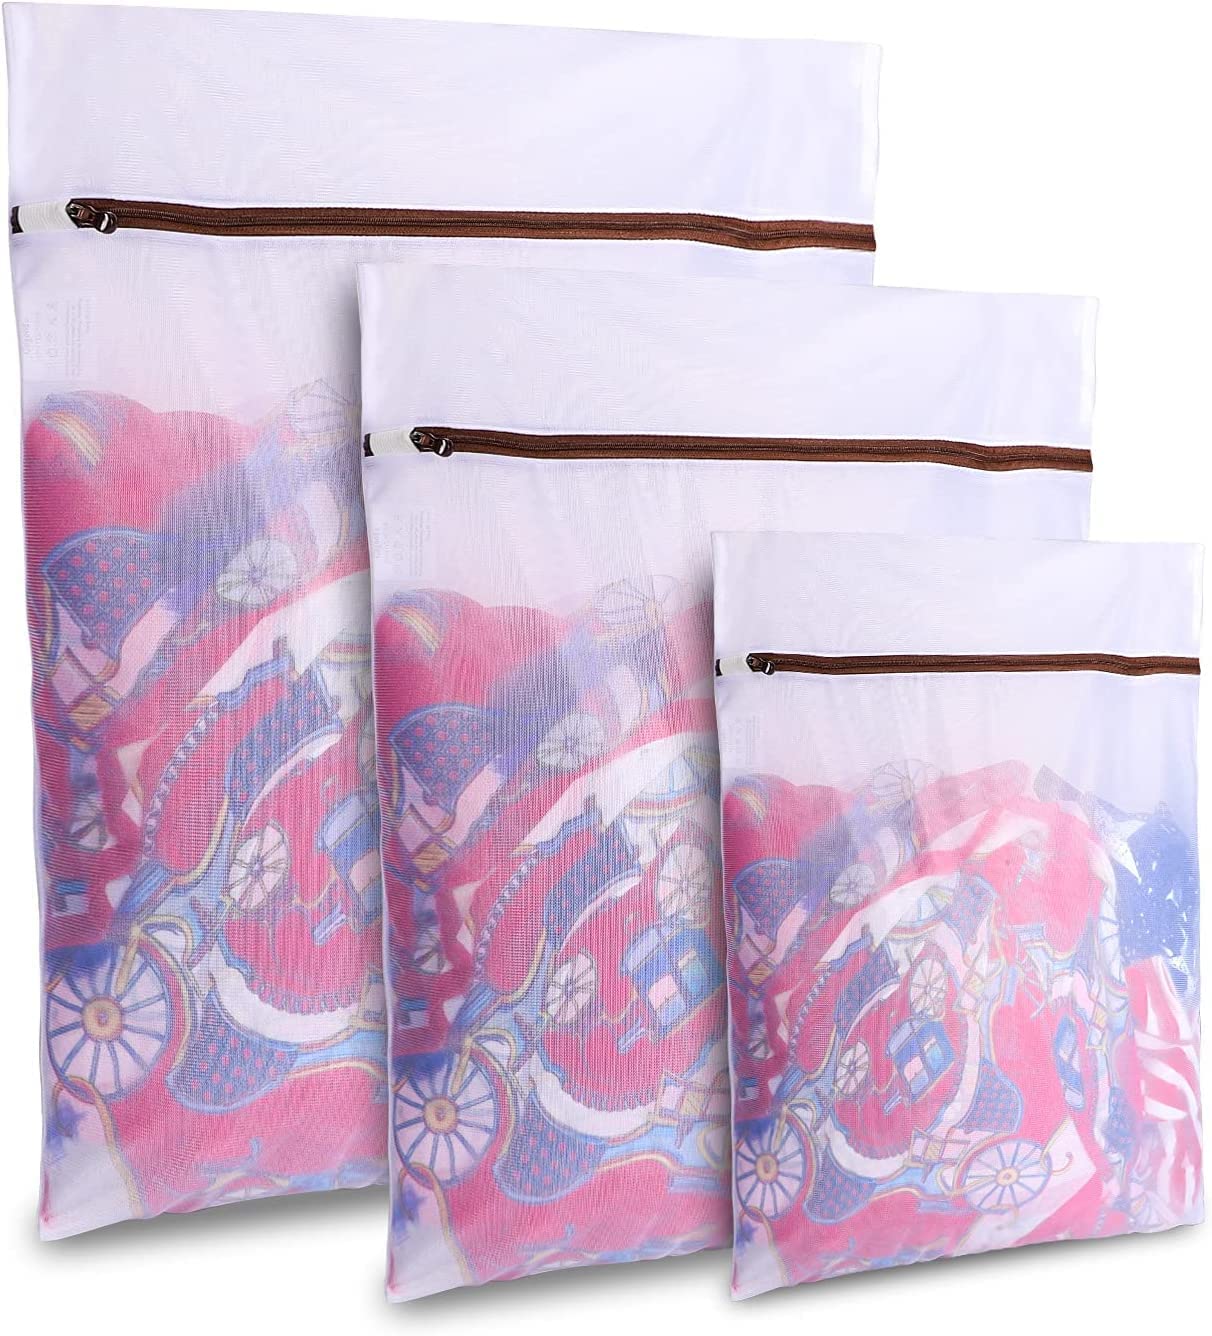 Buy 7Pcs Mesh Laundry Bags for Delicates with Premium Zipper